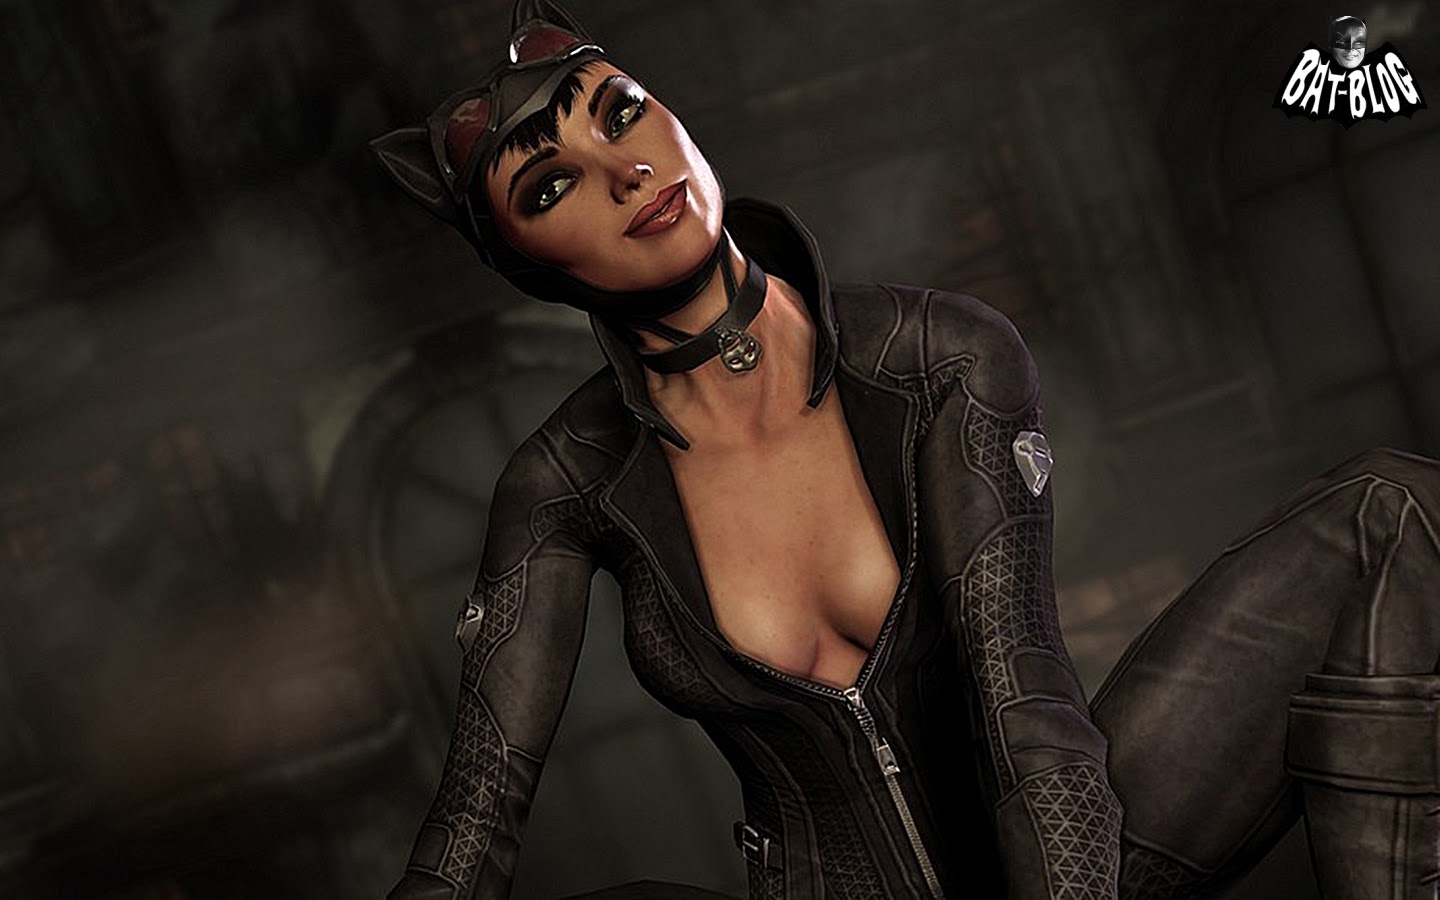 Batman Arkham City Catwoman New Video Game Trailer And Wallpaper